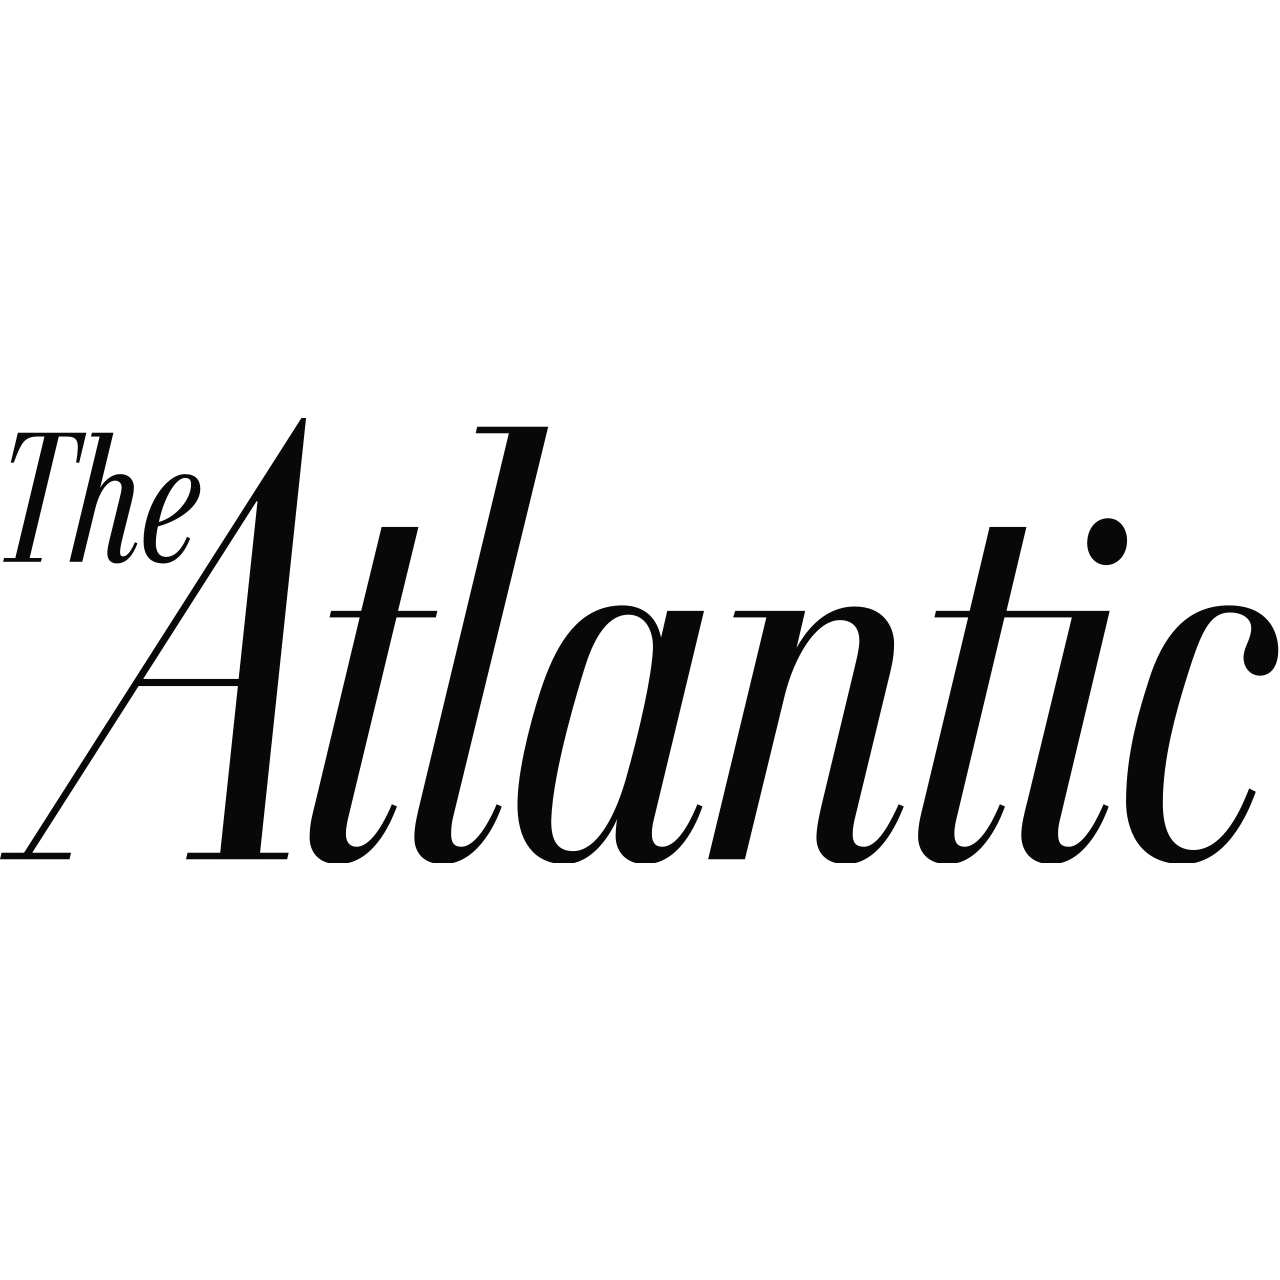 Atlantic logo black